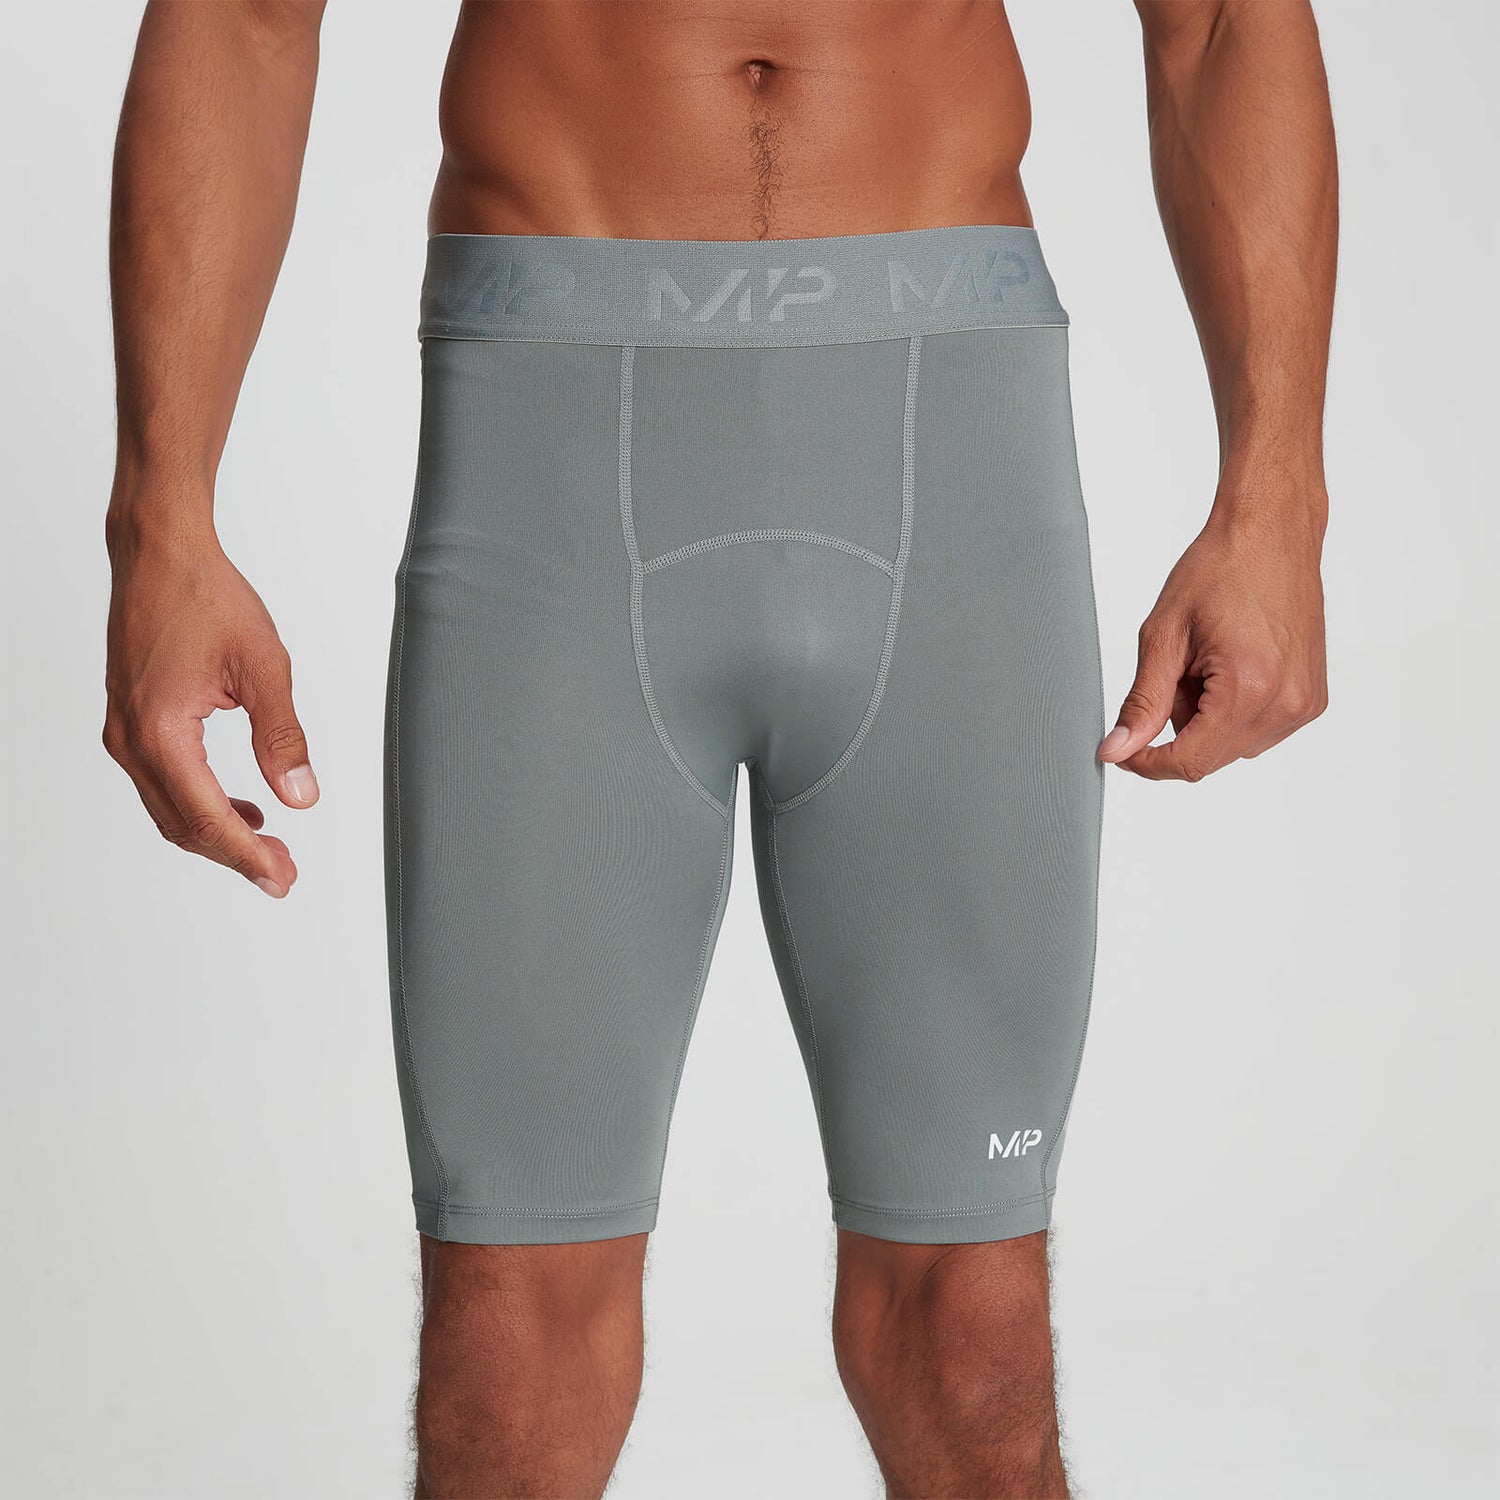 MP Men's Base Layer Shorts - Sturm - XXS